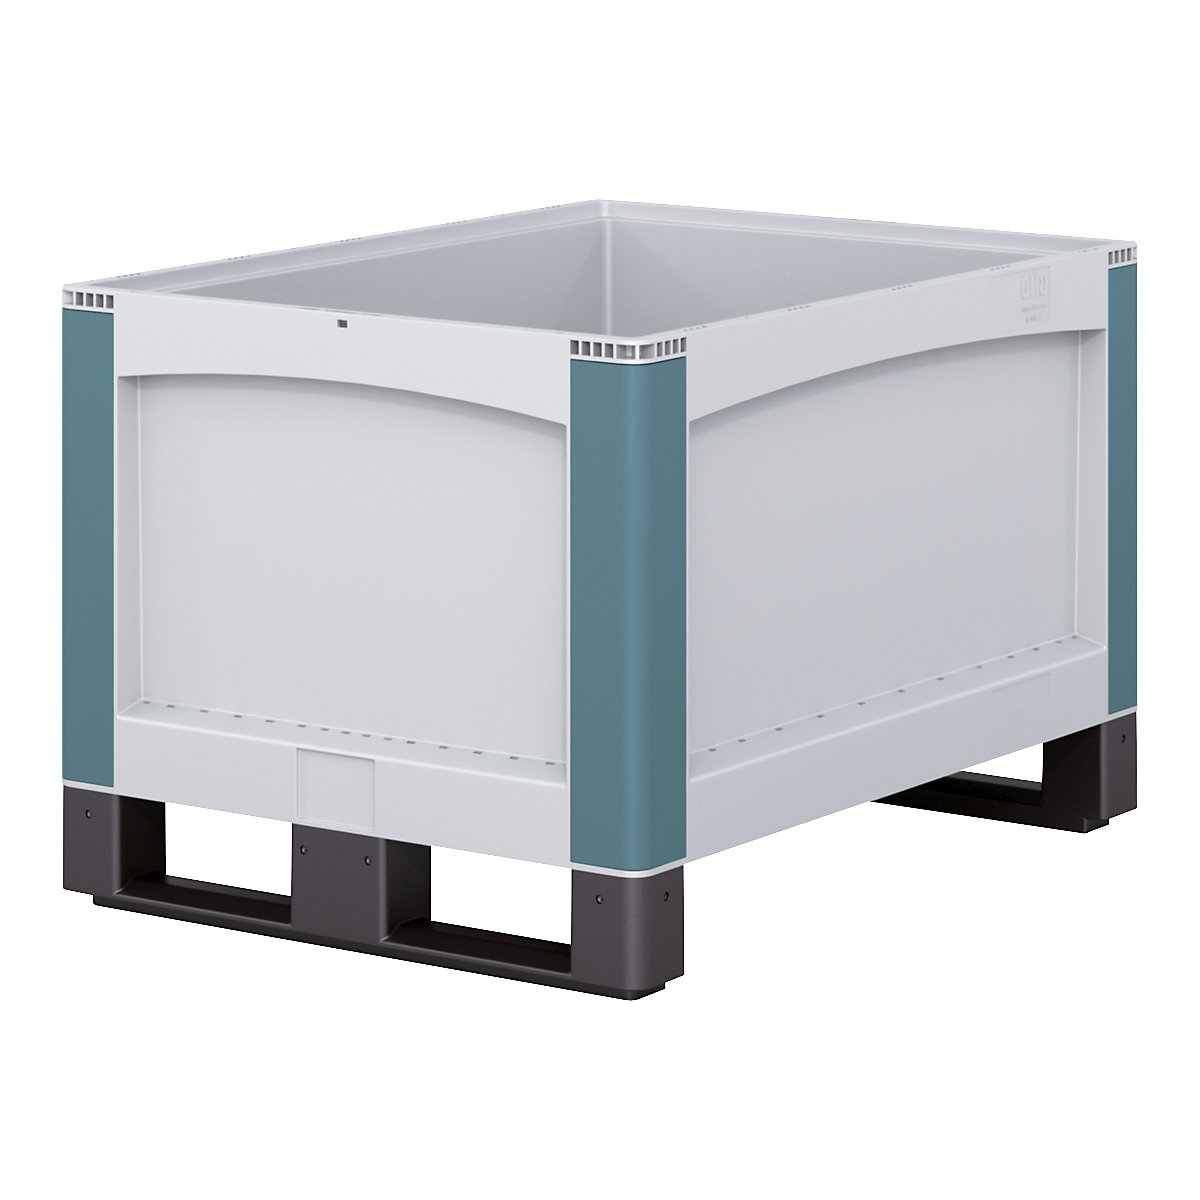 SL heavy duty container – BITO